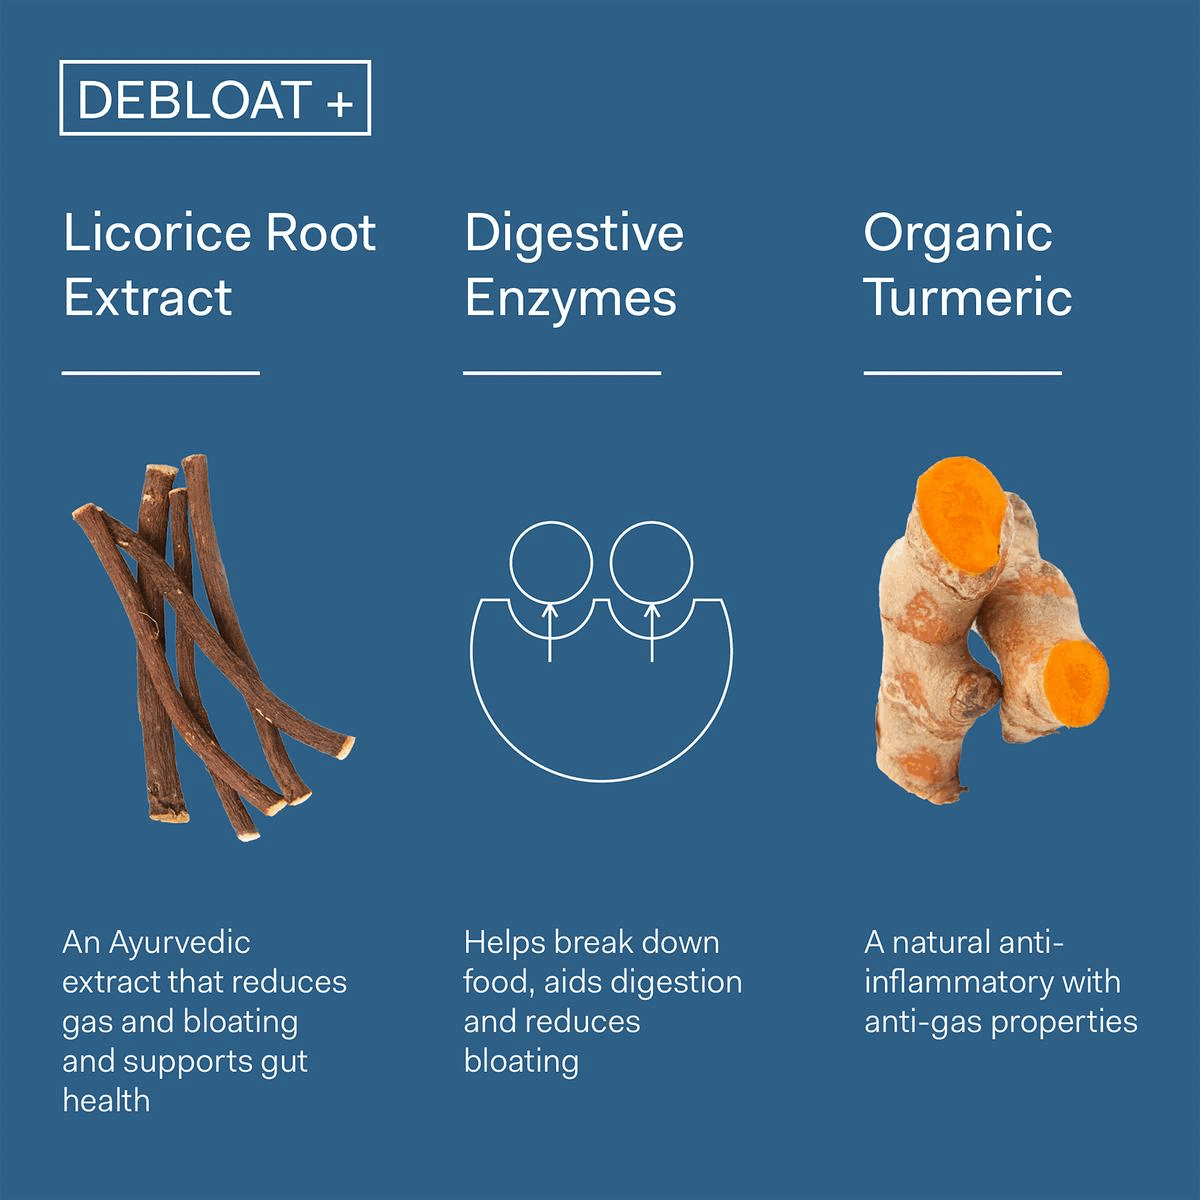 Image 1, ingredients and their benefits. Image 2, difference between prebiotic + probiotic vs debloat